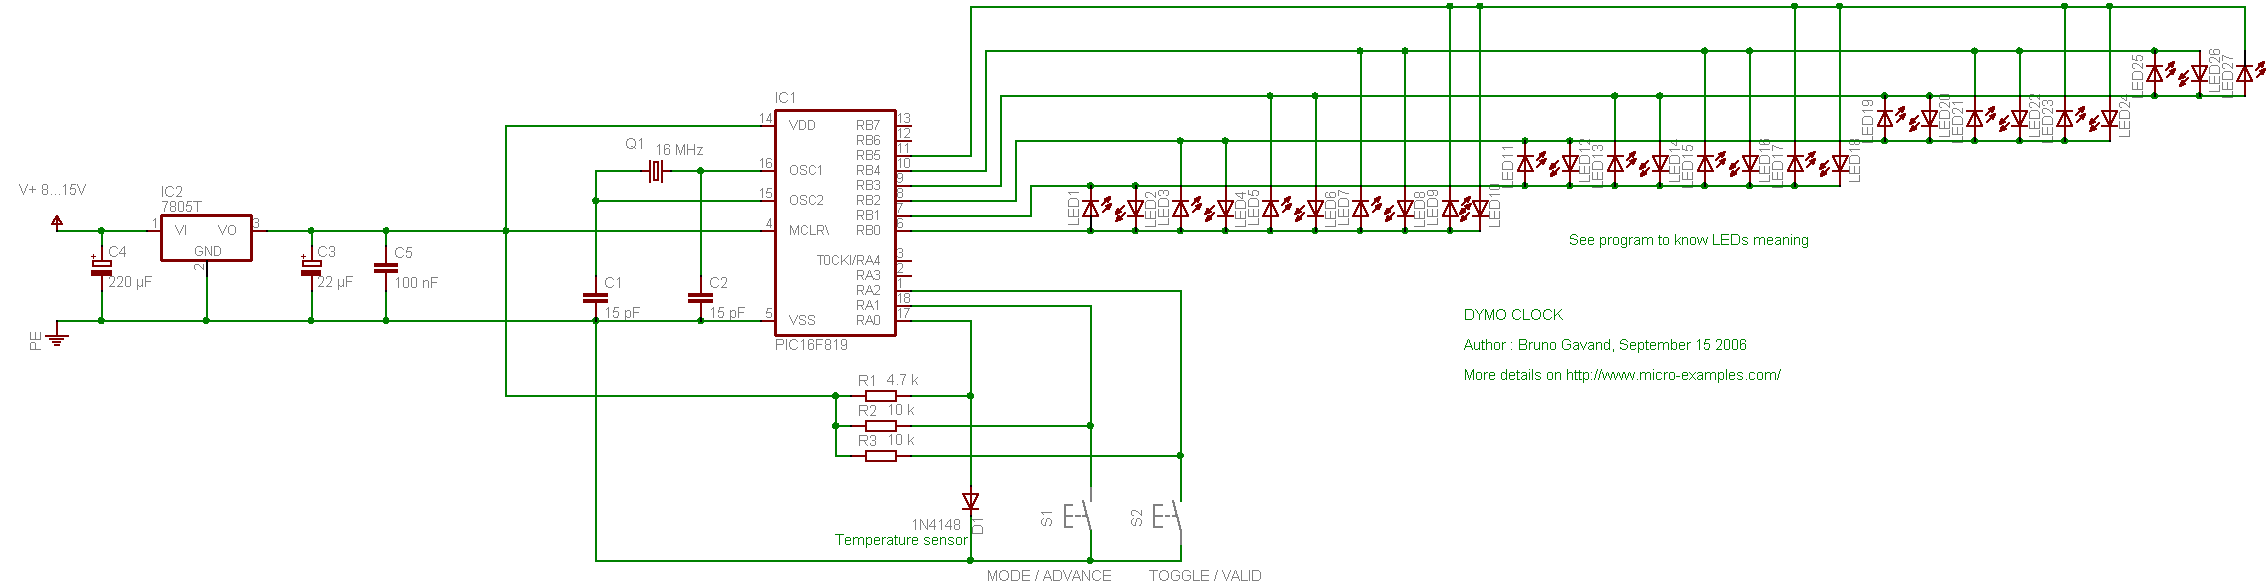 DymoClock circuit schematic